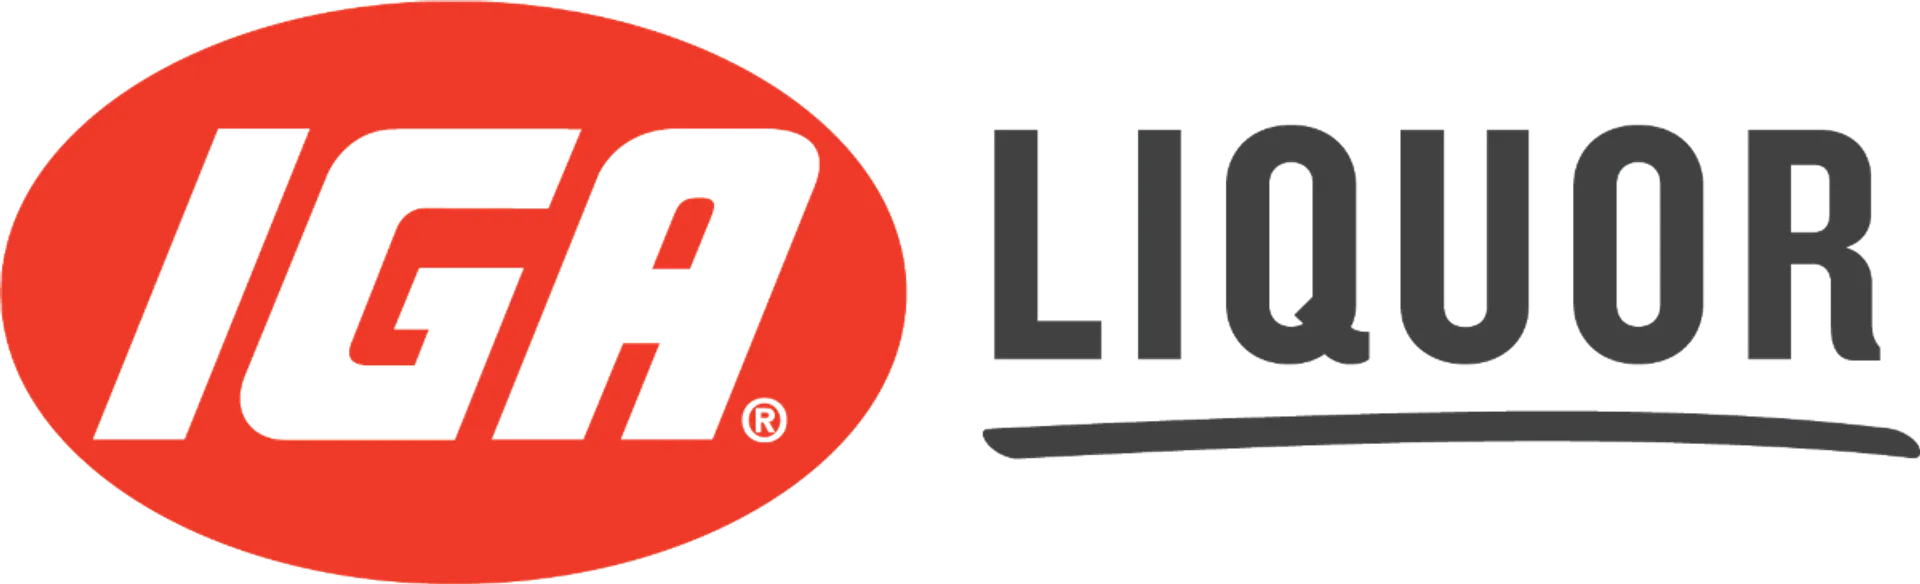 IGA LIQUOR logo of current flyer